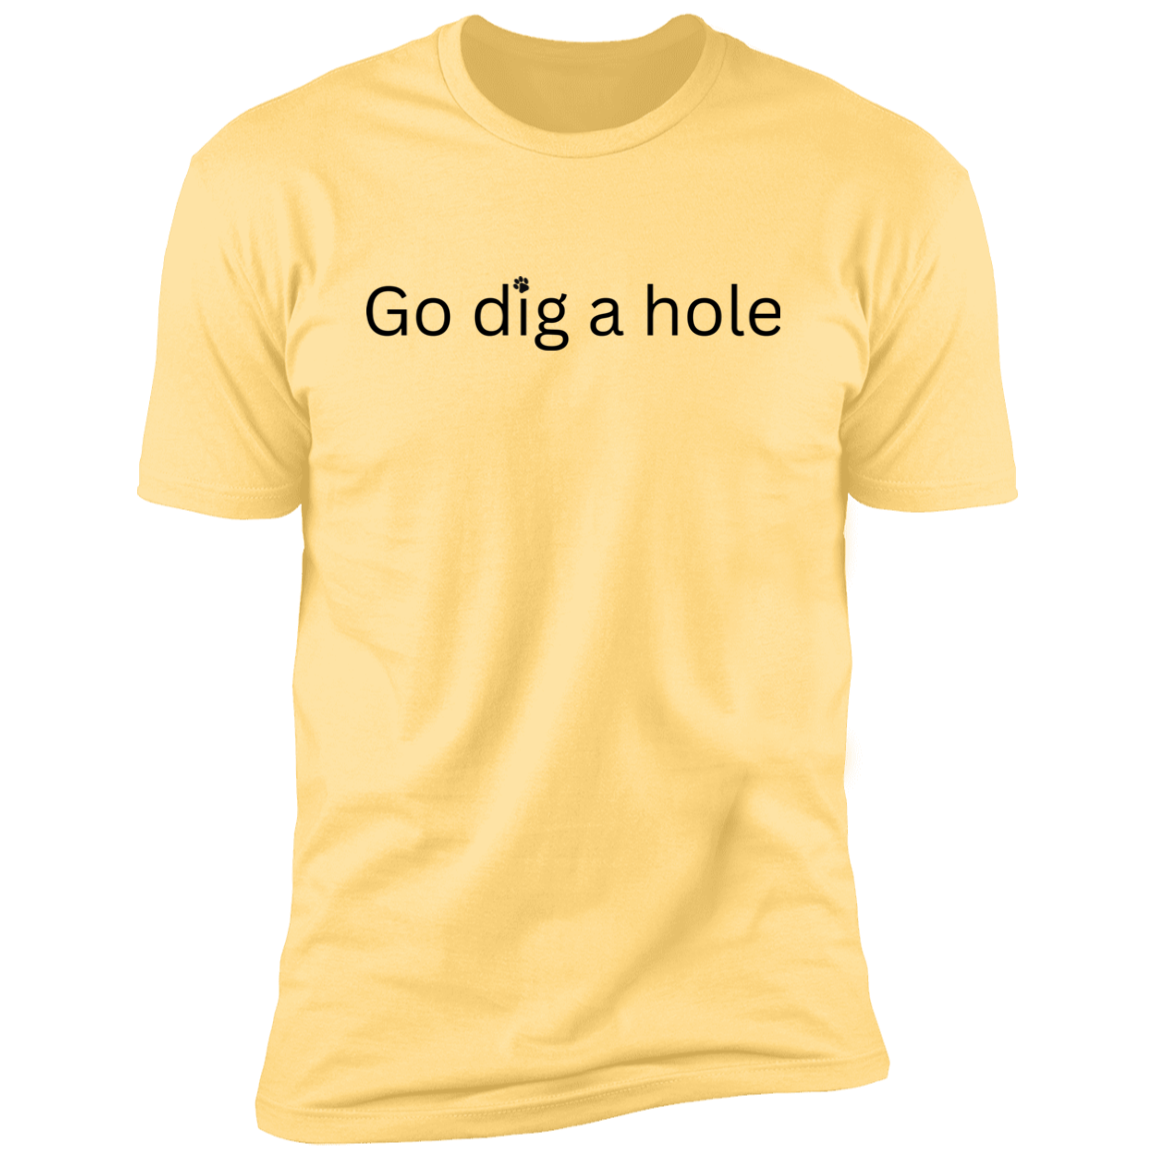 Go Dig a Hole Dog T-Shirt, Dog shirt for humans, funny dog shirt, funny t-shirt, in banana cream